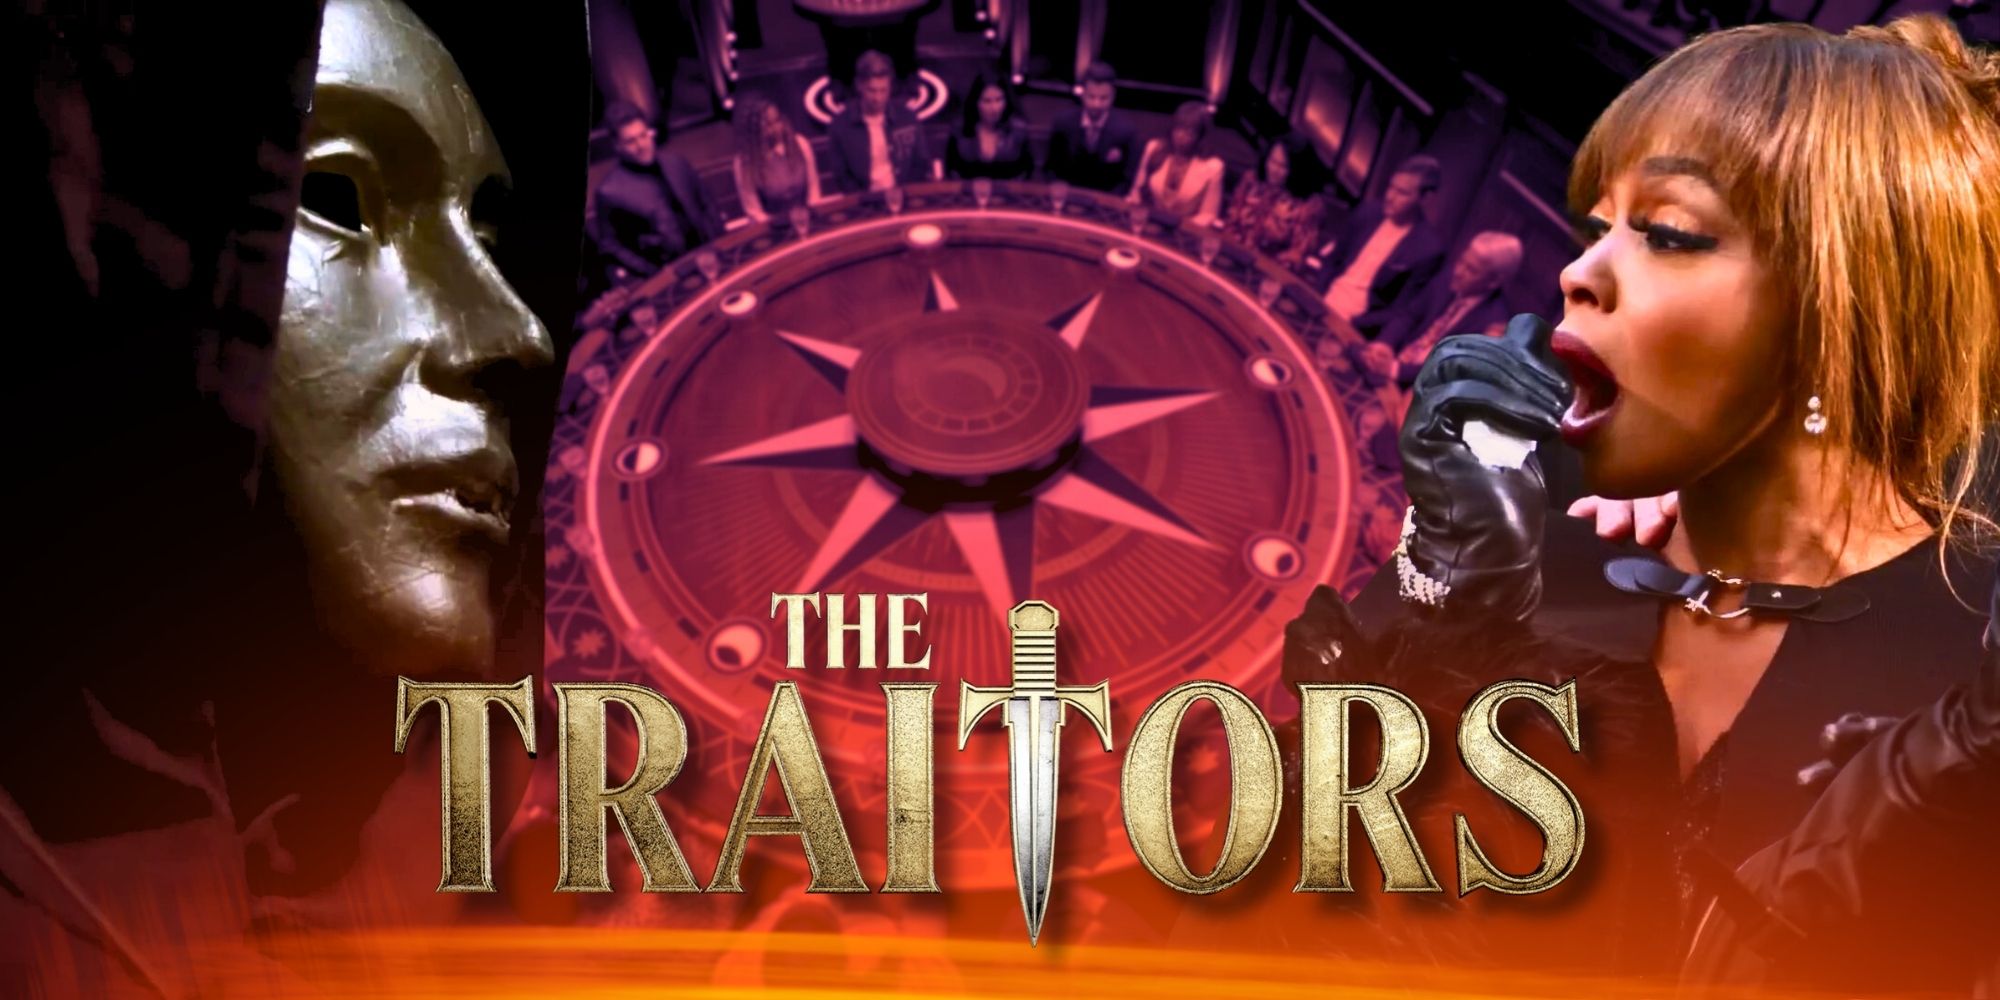 El tráiler extendido de la temporada 2 de The Traitors US revela dos impactantes miembros del elenco sorpresa